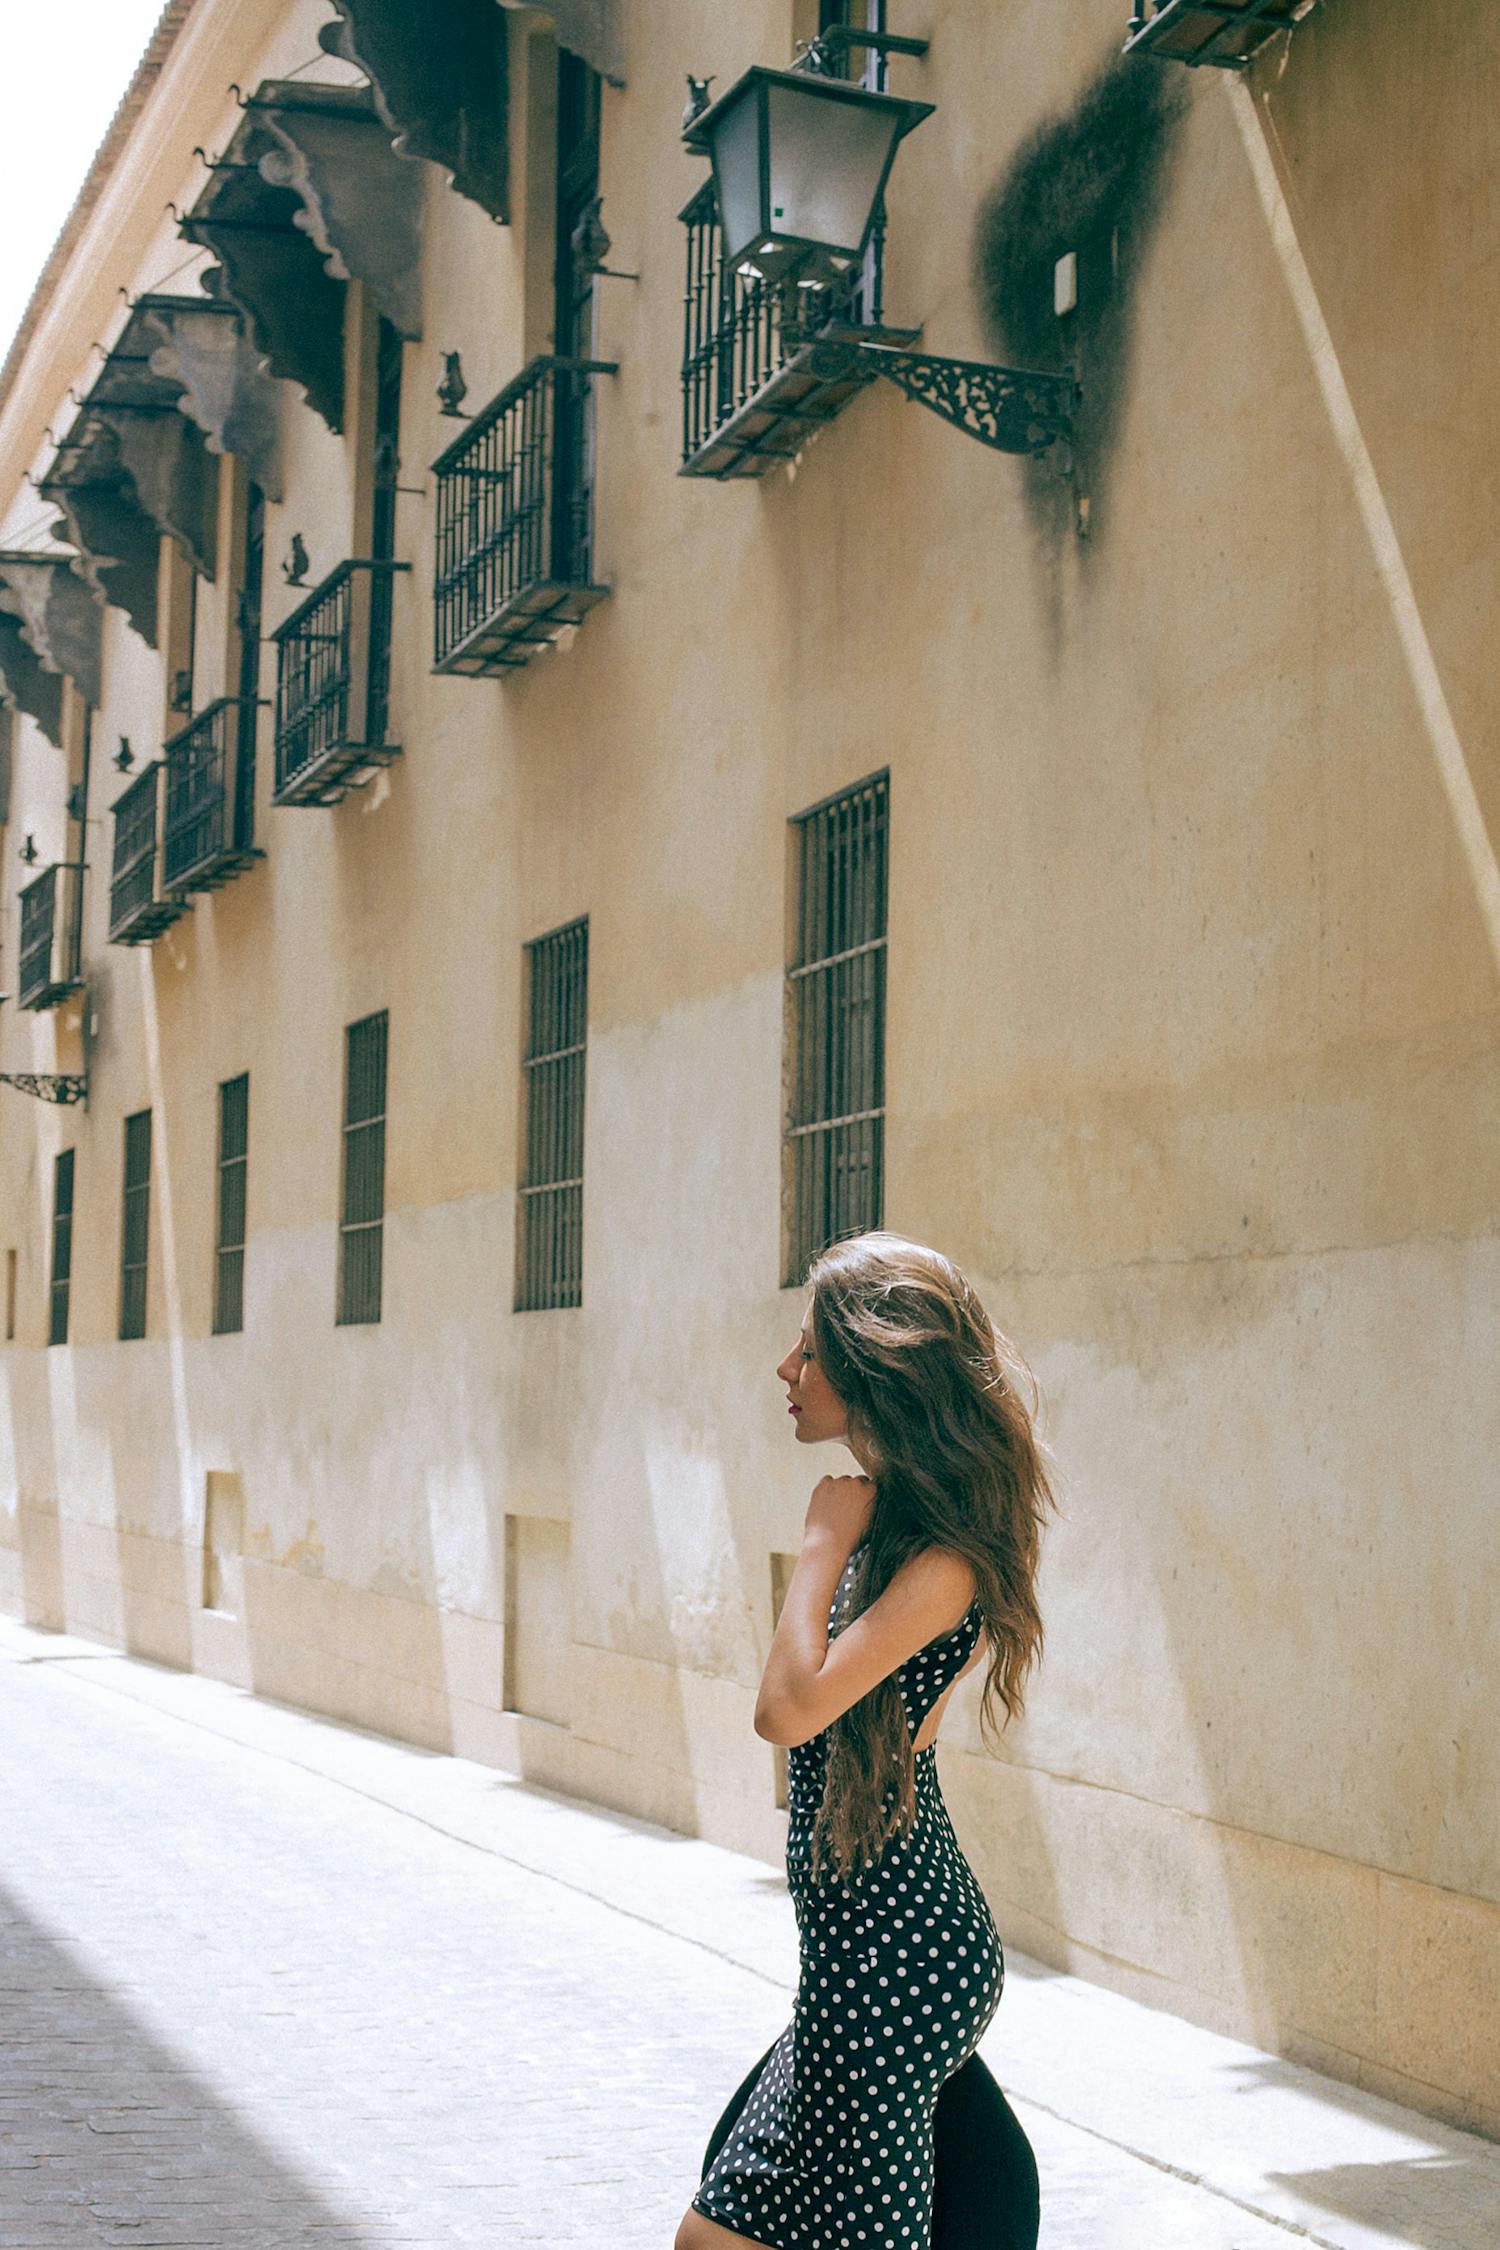 Stylish Woman In Dress Standing On Sidewalk Near Old Building · Free